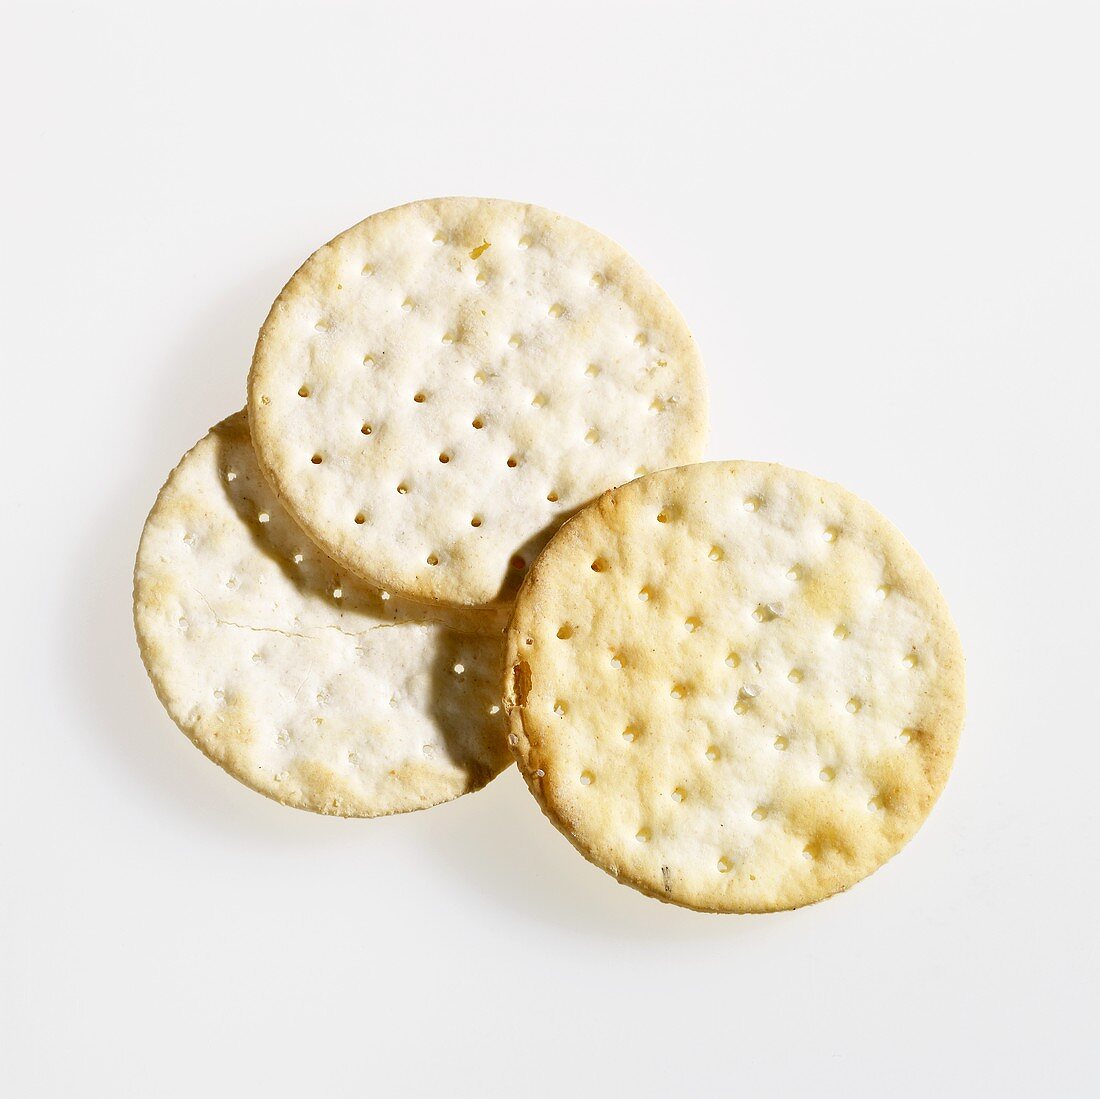 Three large crackers